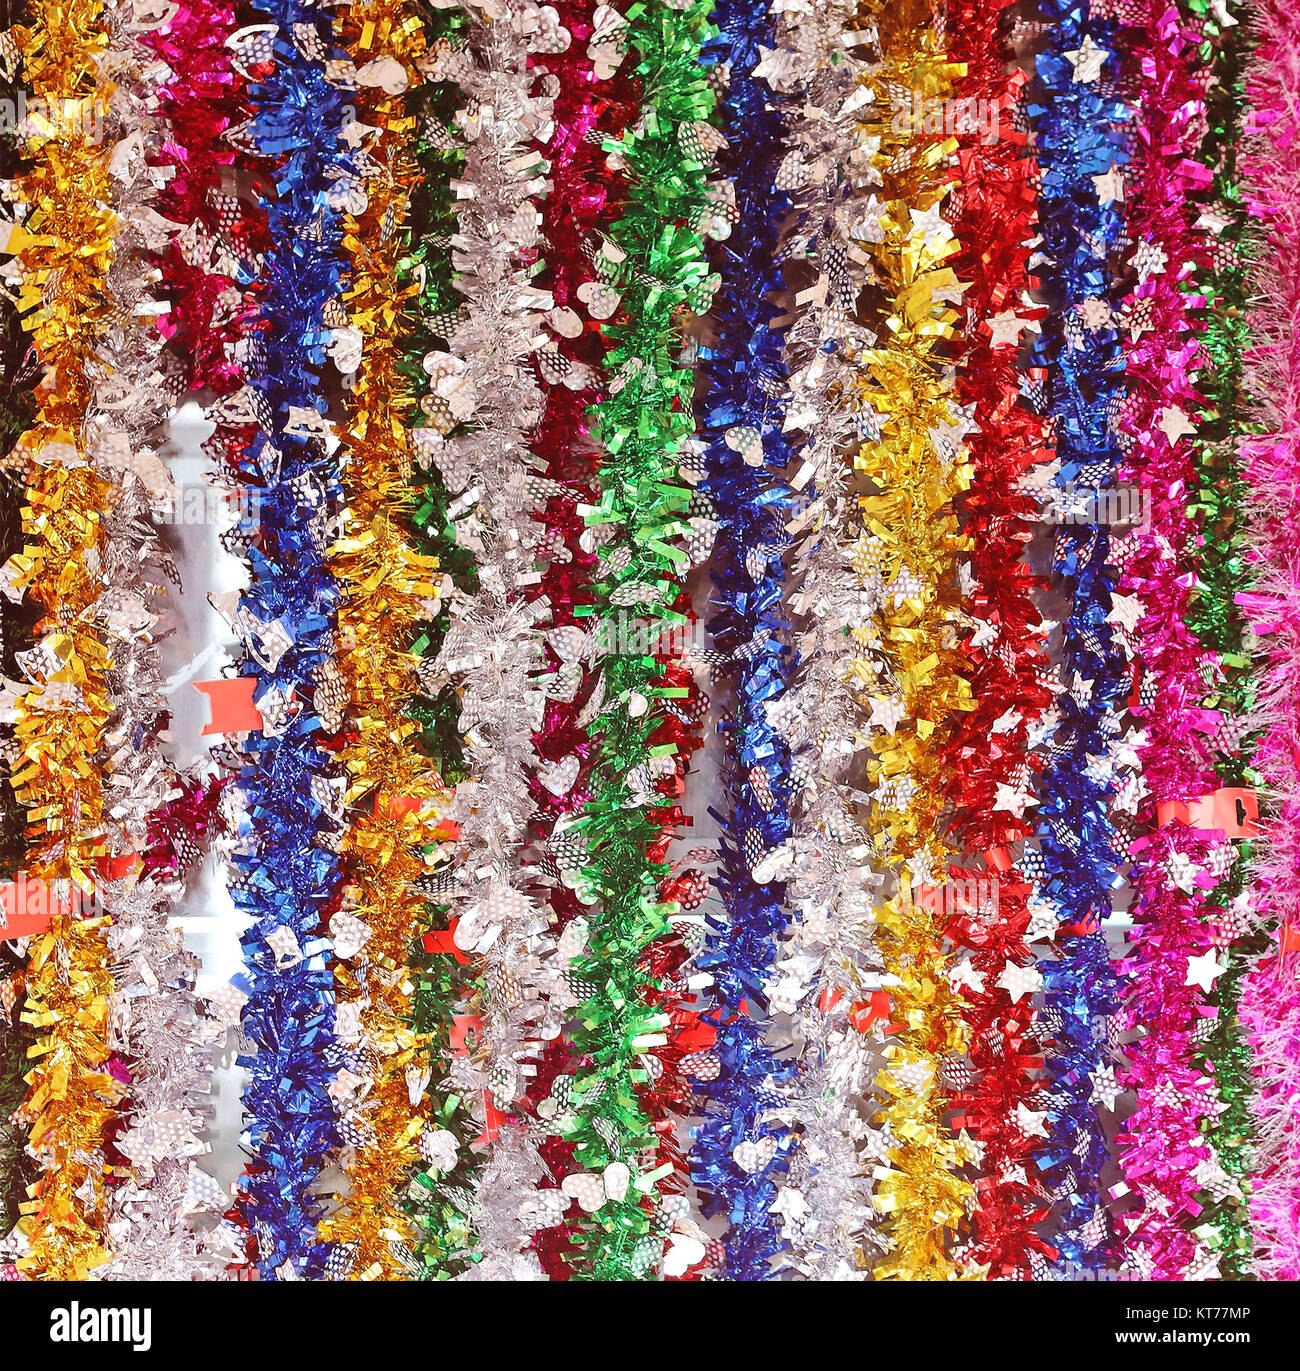 Colorful shiny decorations Stock Photo - Alamy